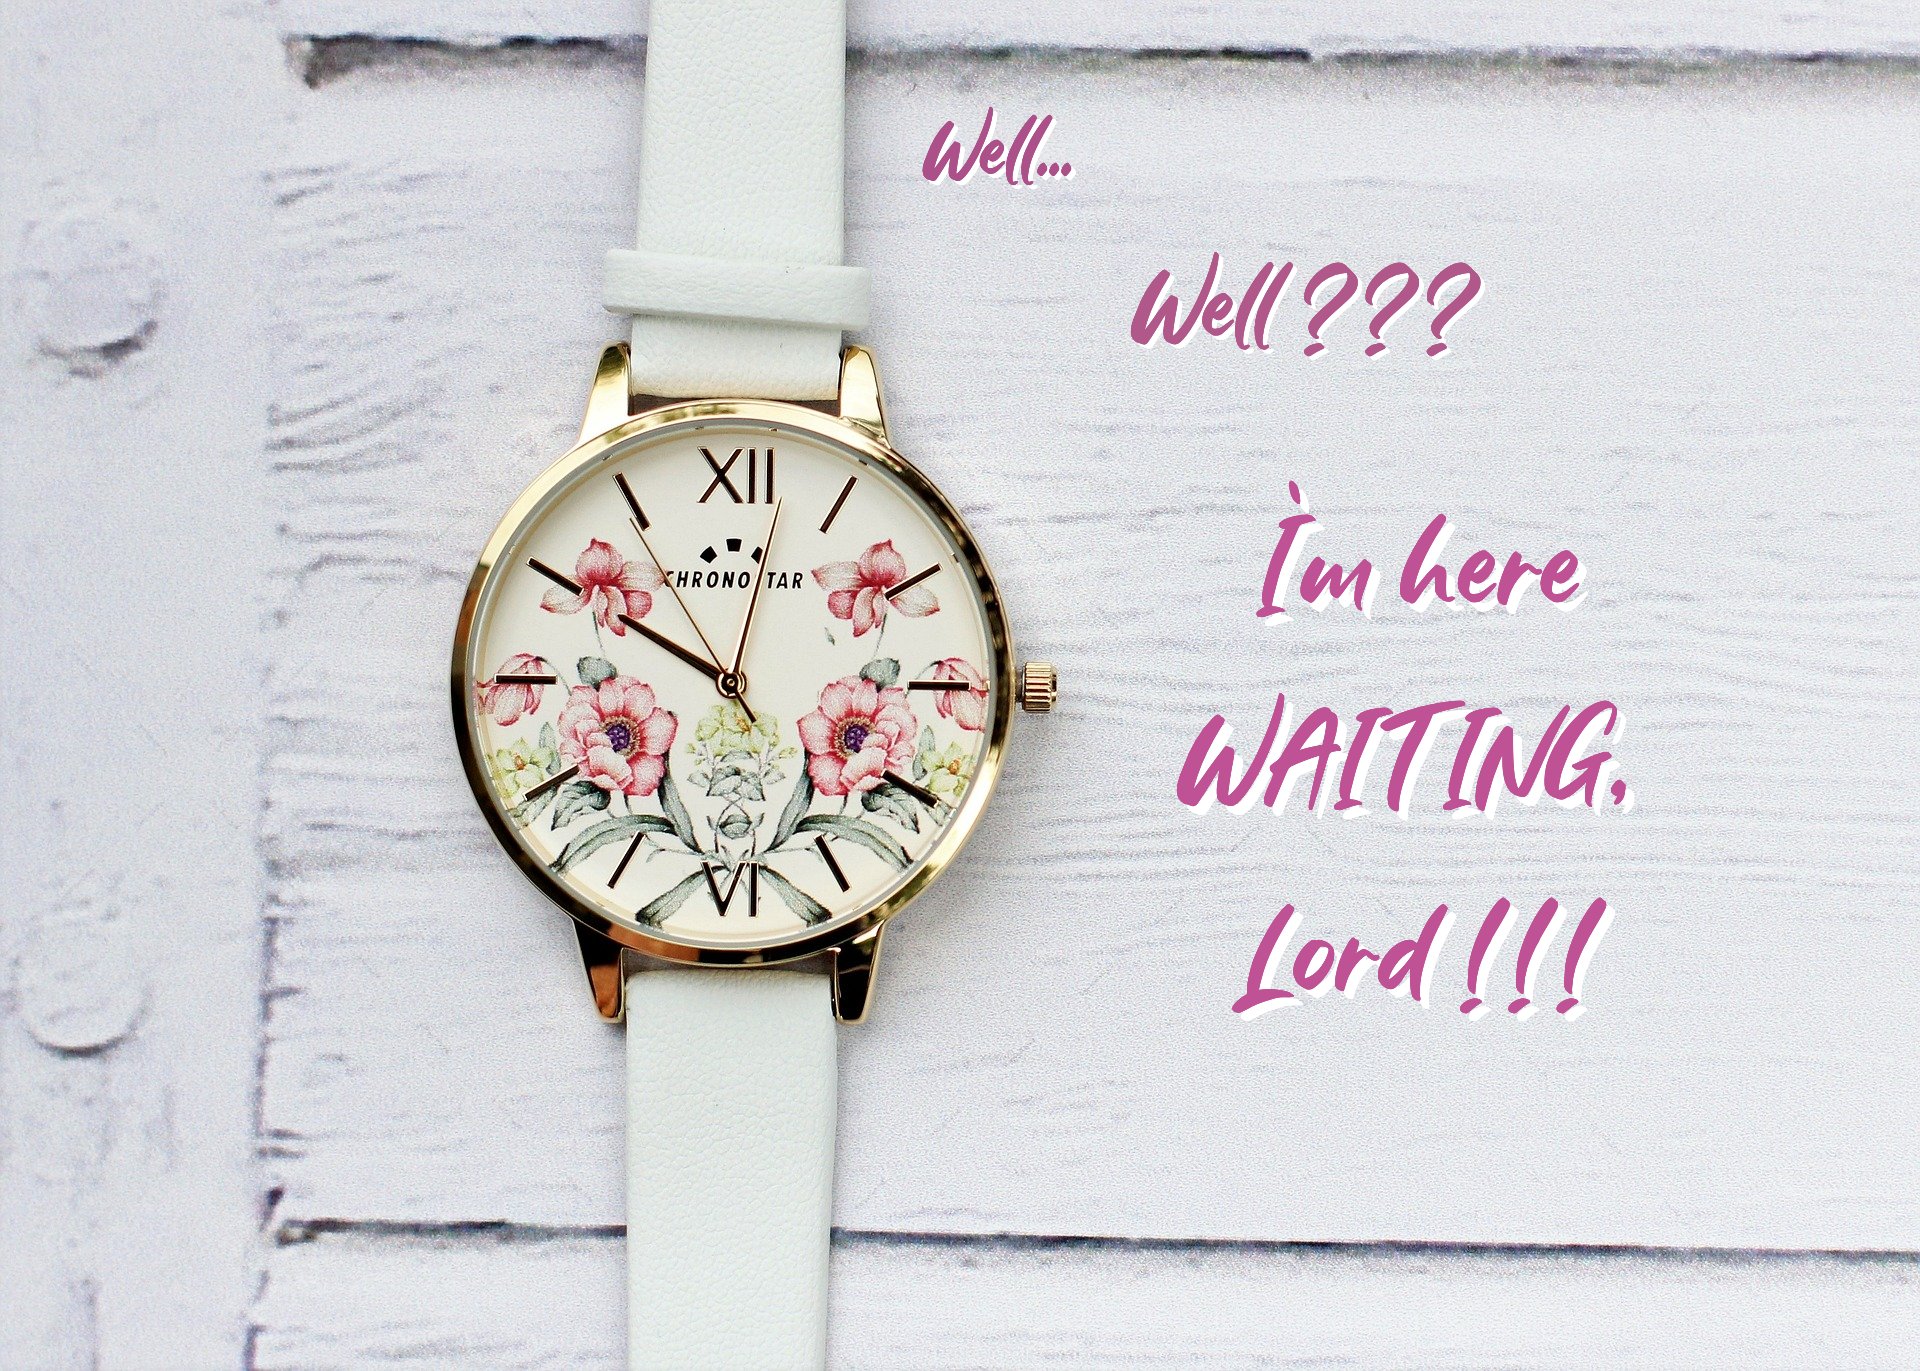 A pretty watch is shown with an impatient message scrawled beside it. (OSV News photo/Katarzyna, Pixabay)